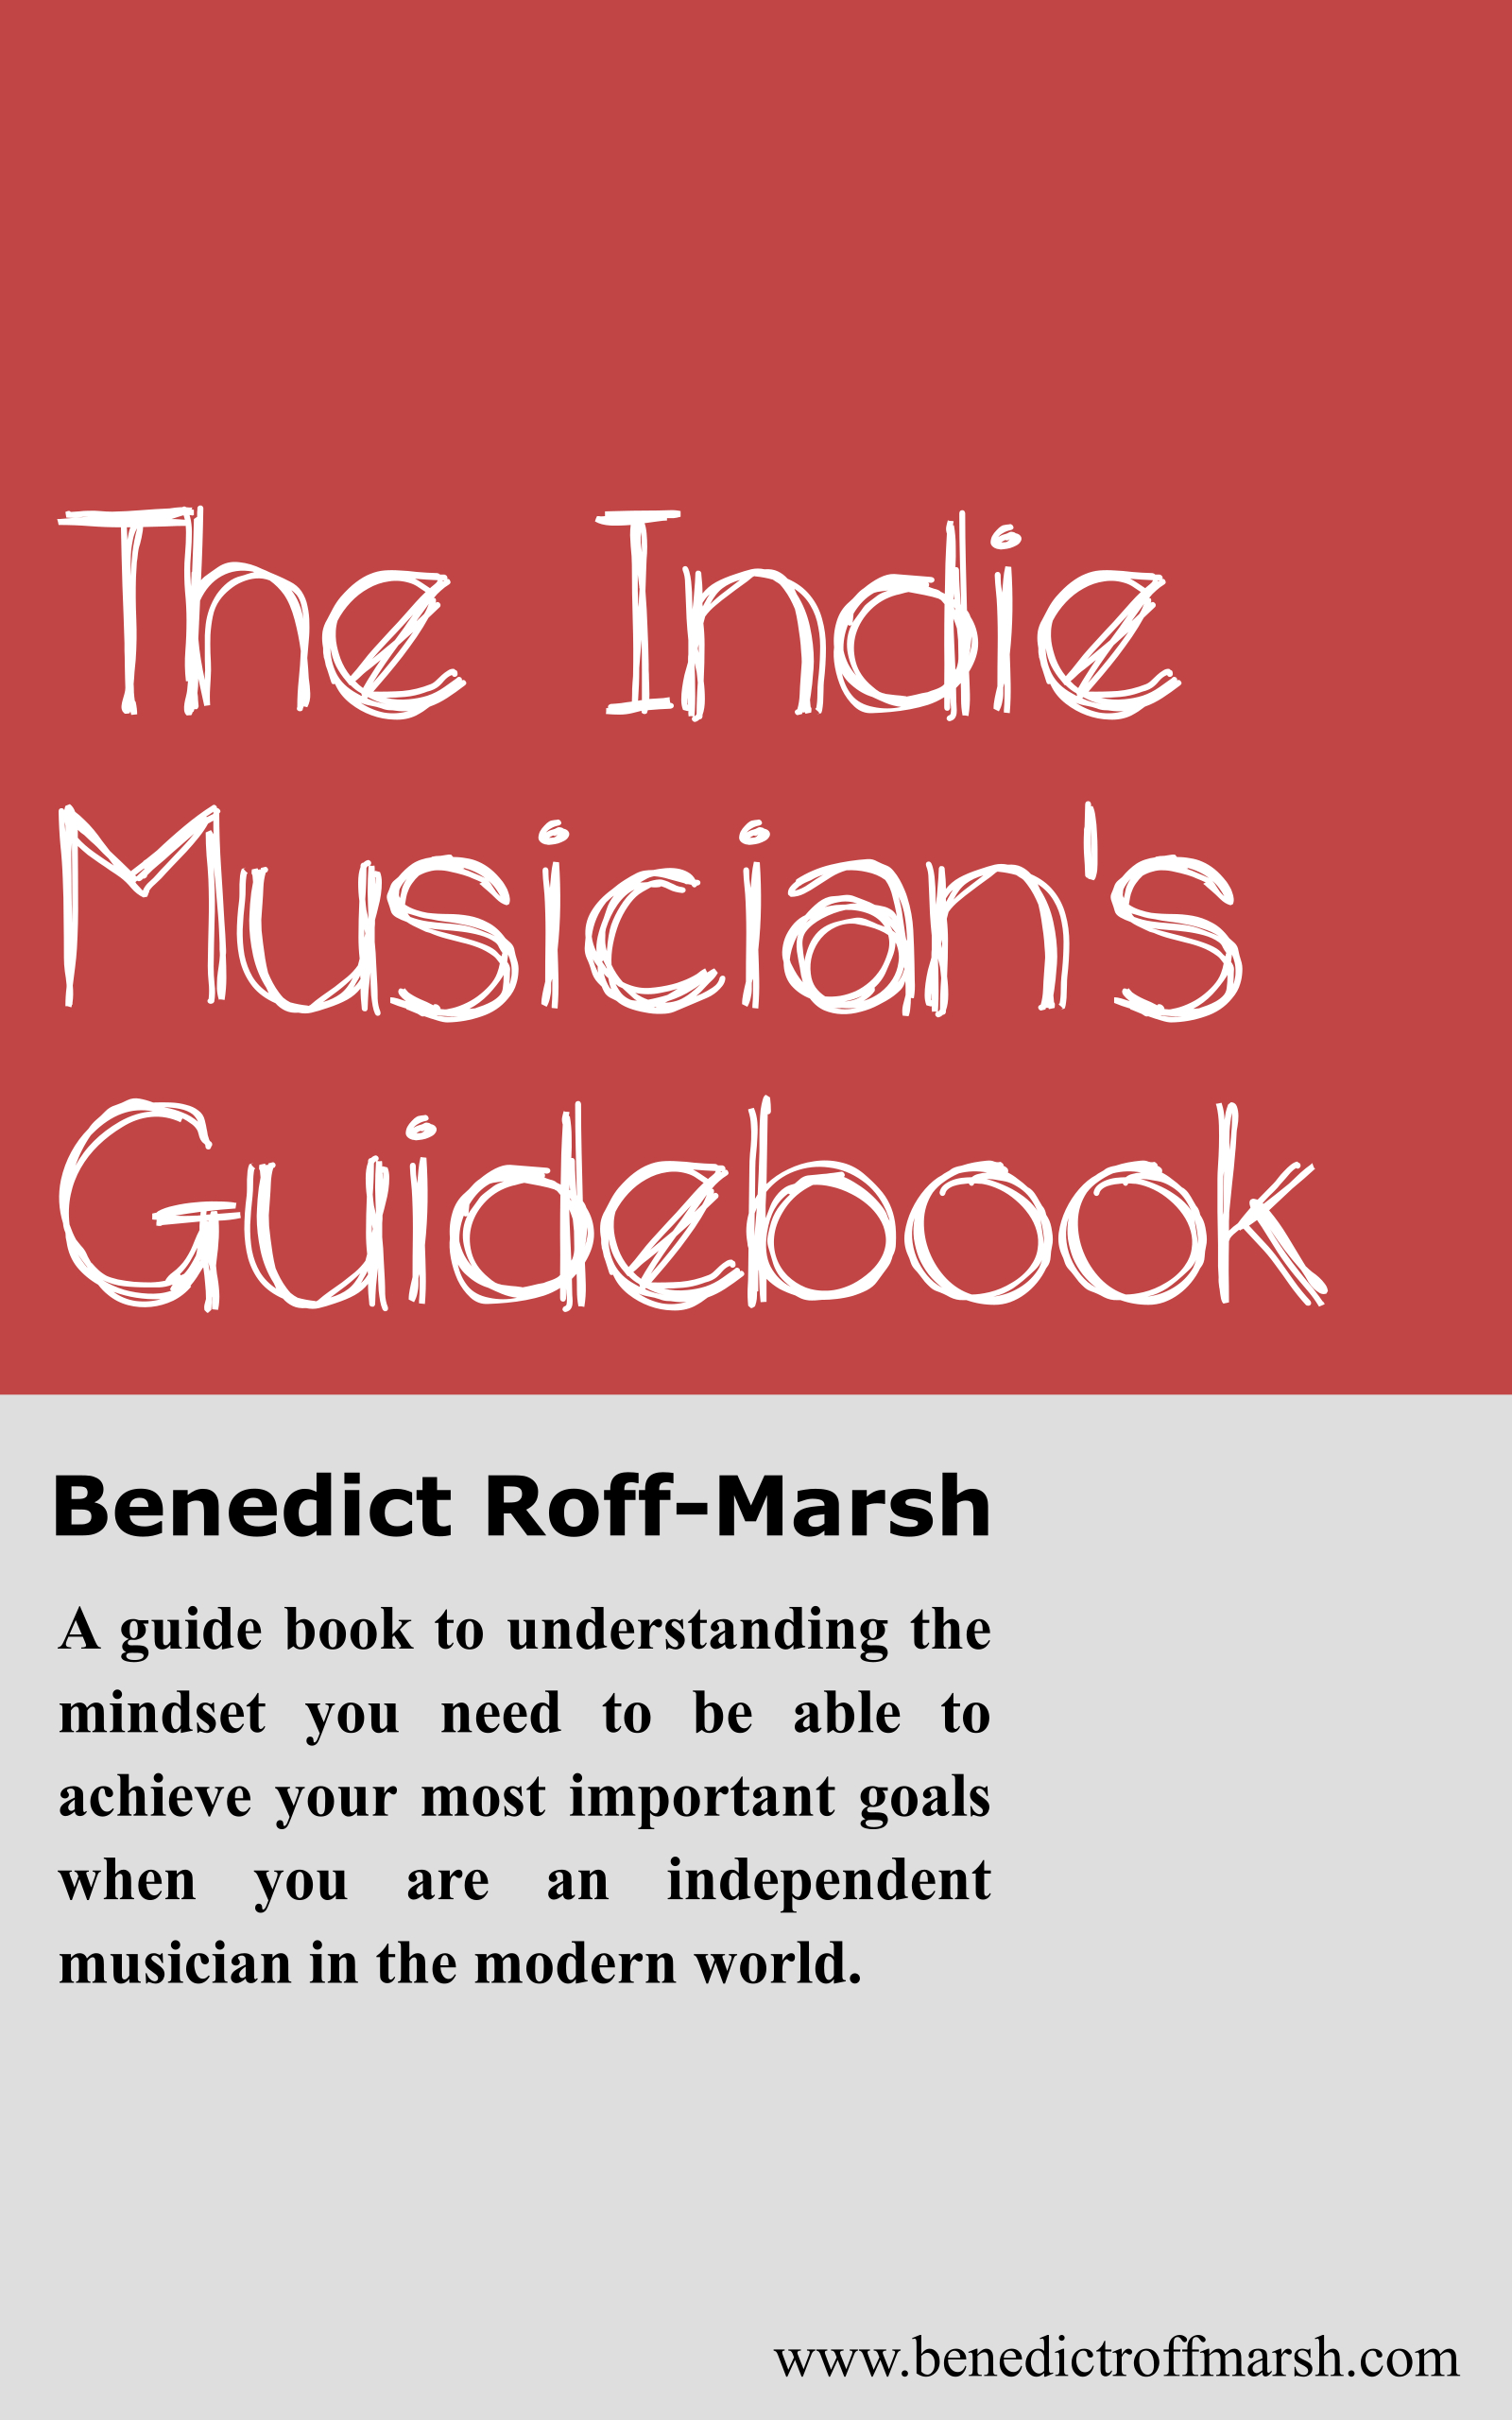 The Indie Musician's Guidebook